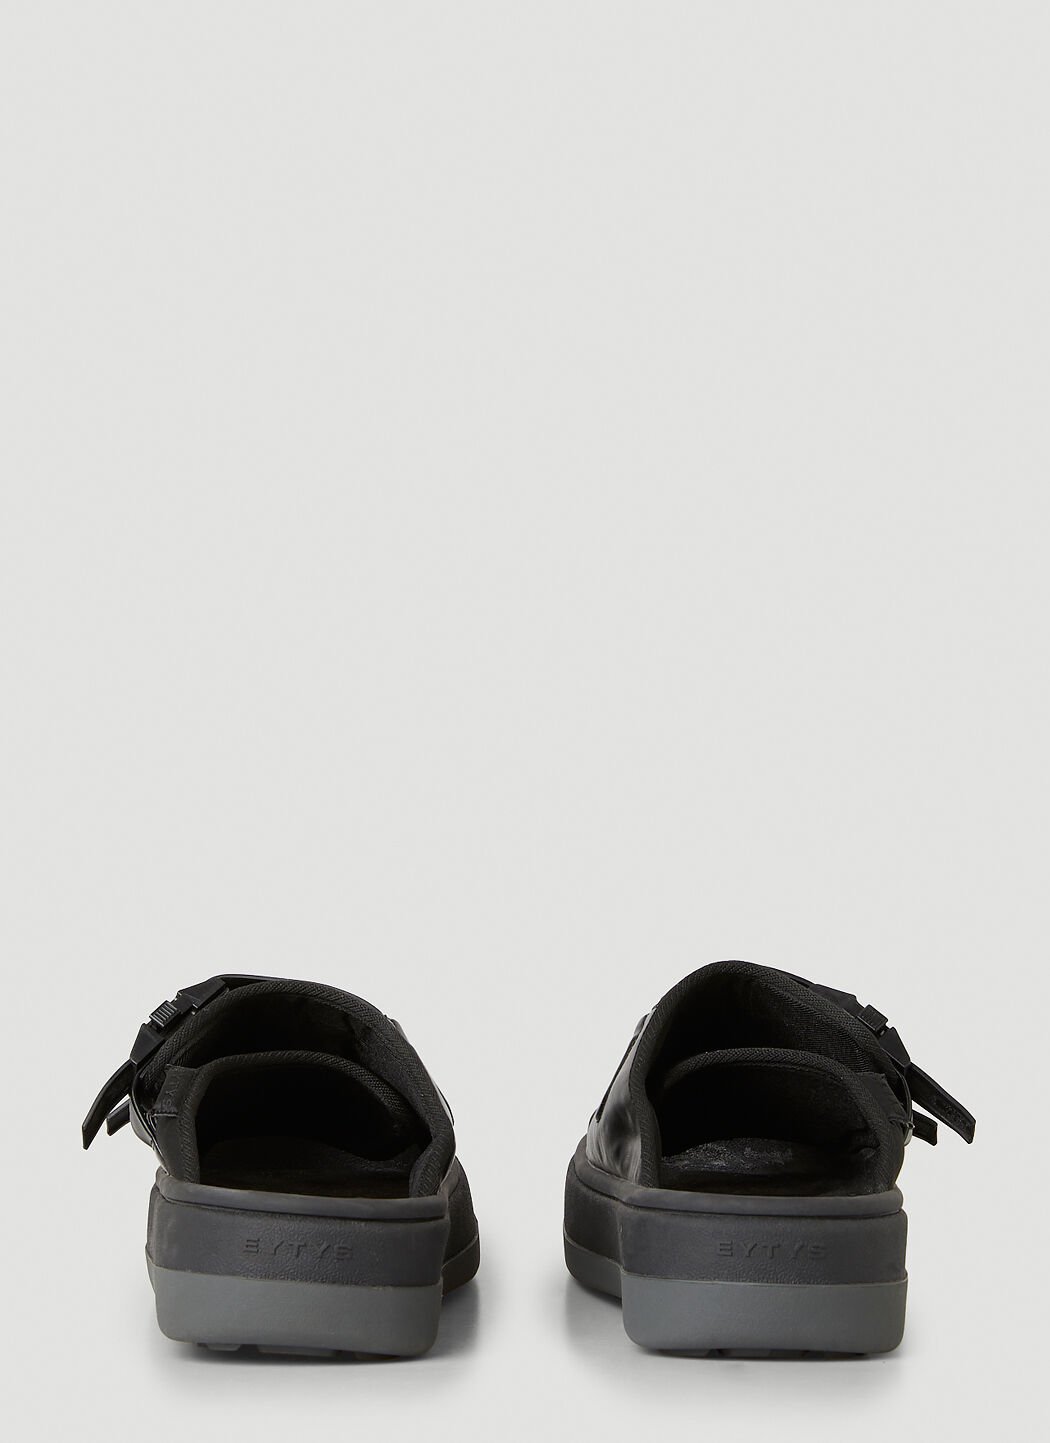 Eytys Capri Sandals in Black | LN-CC®